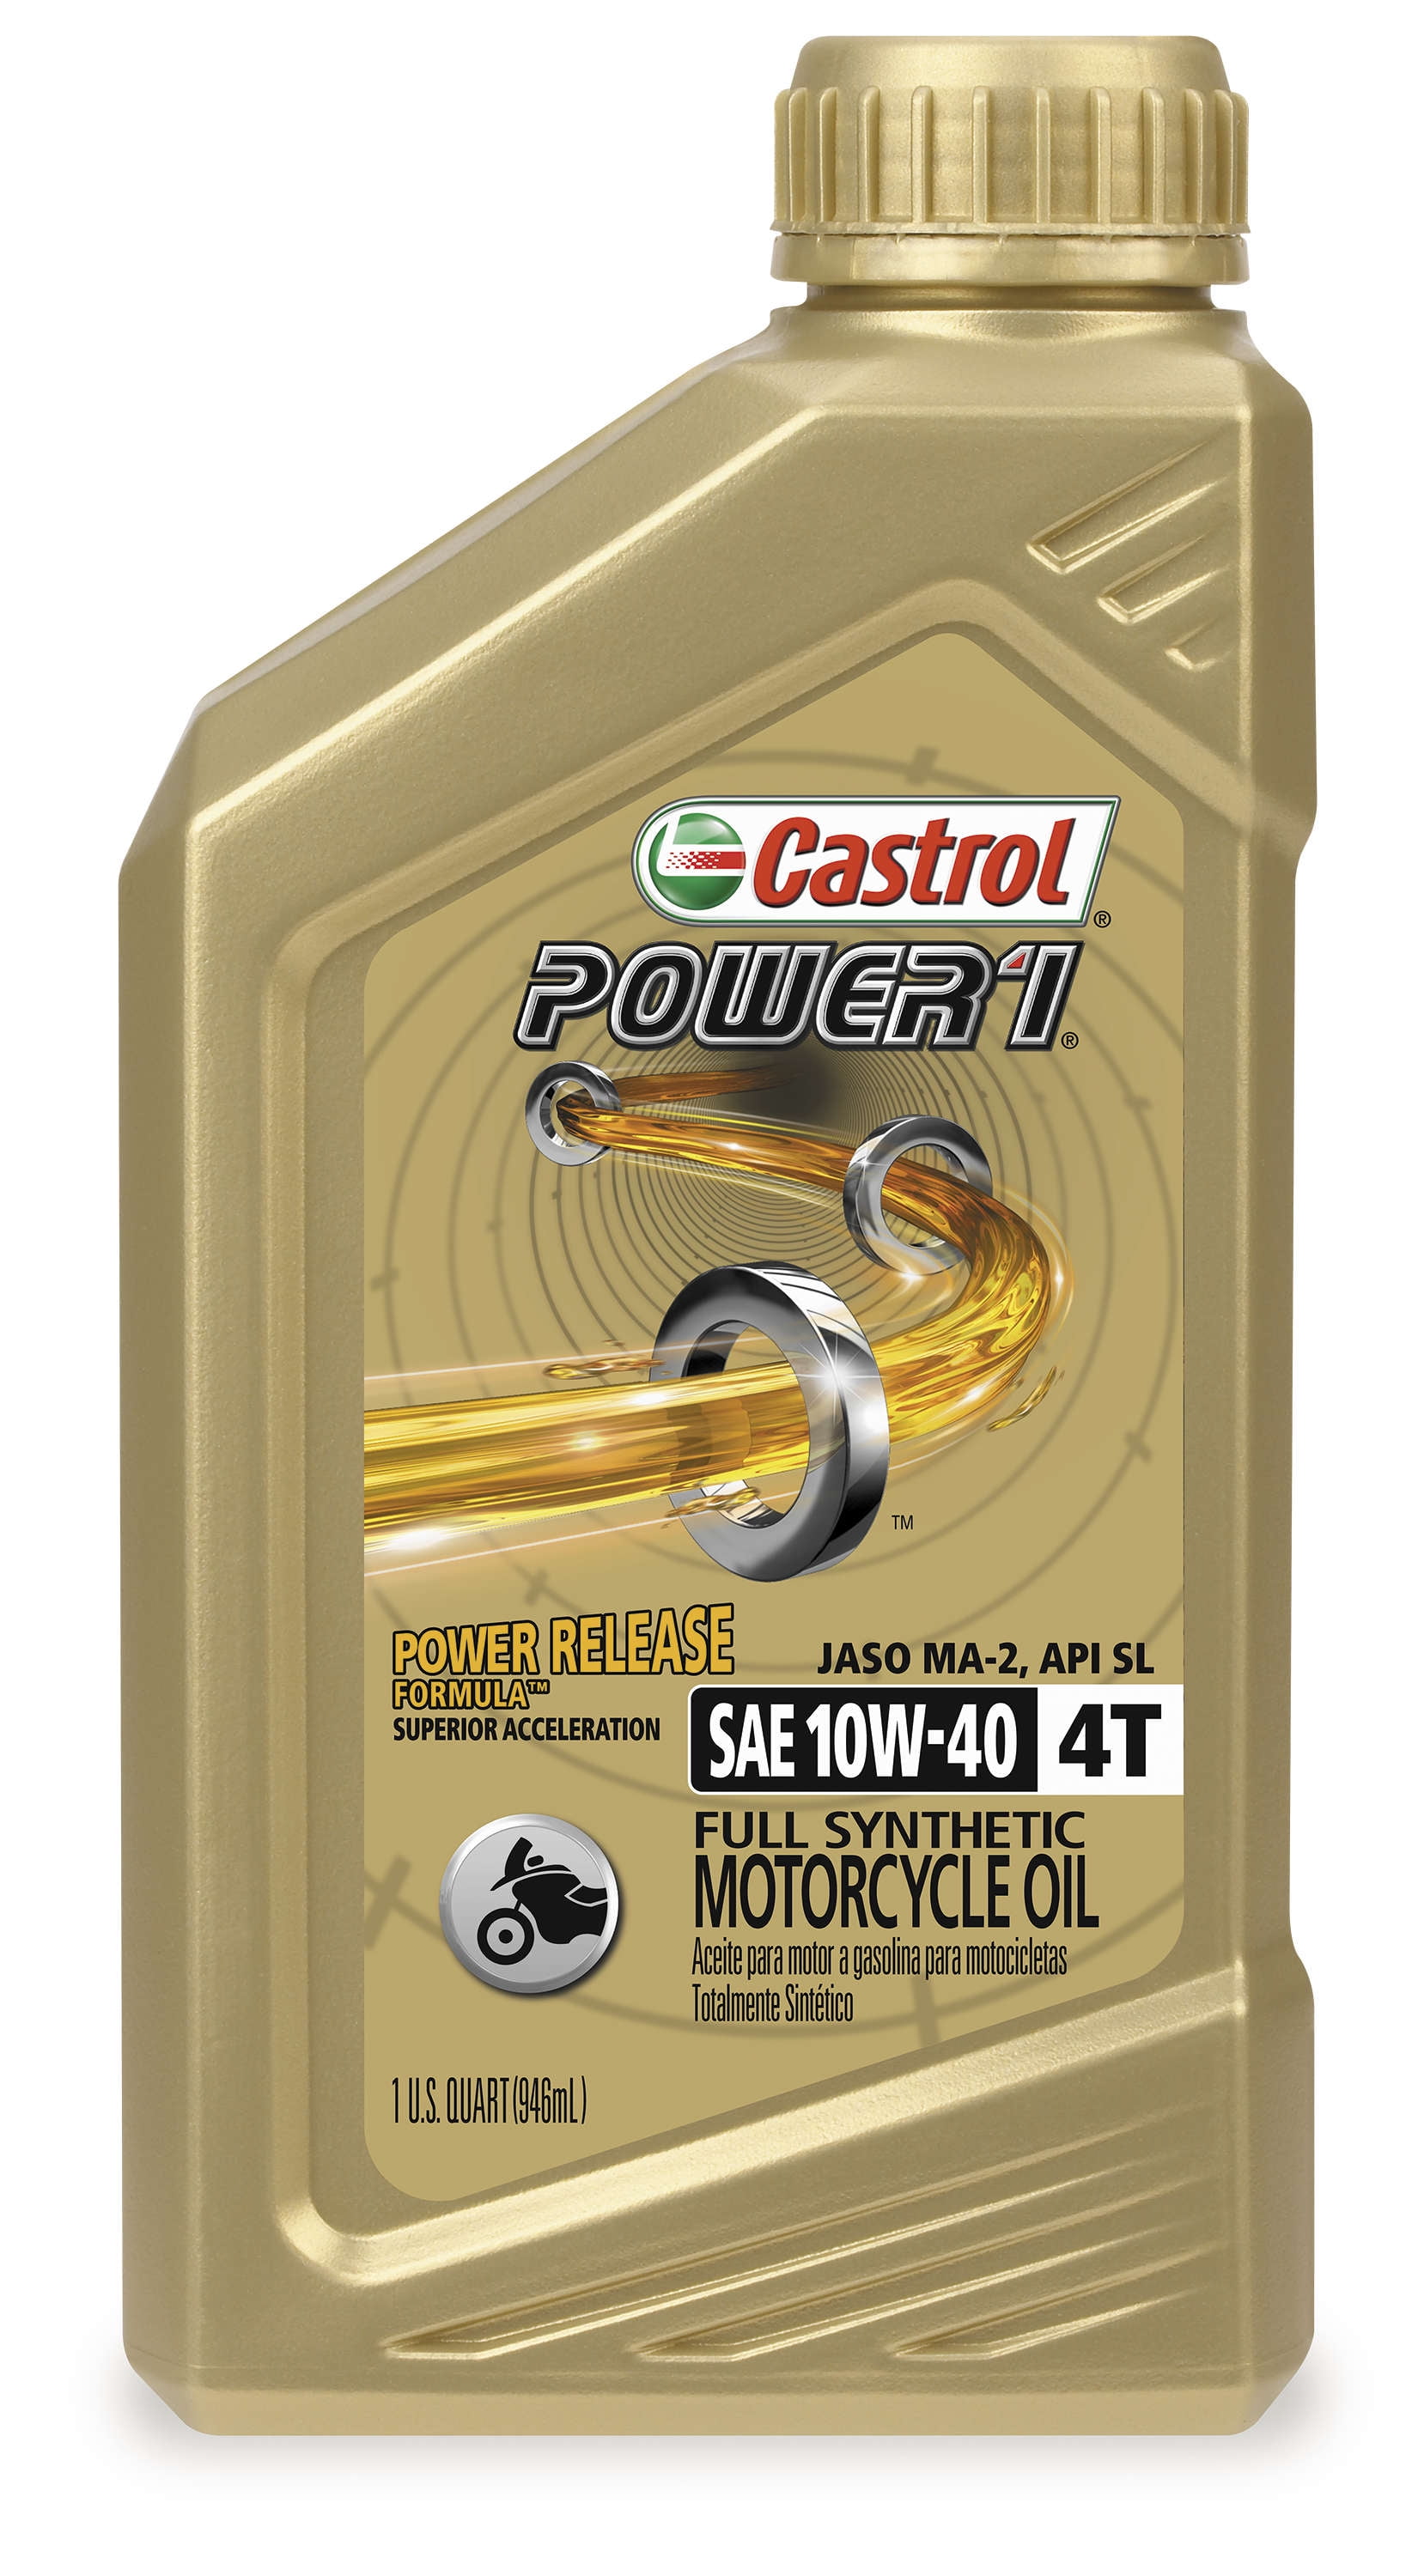 Castrol 15D1C9 Power 1 Racing 4T Motorcycle Oil - 10W40 - 1qt. 